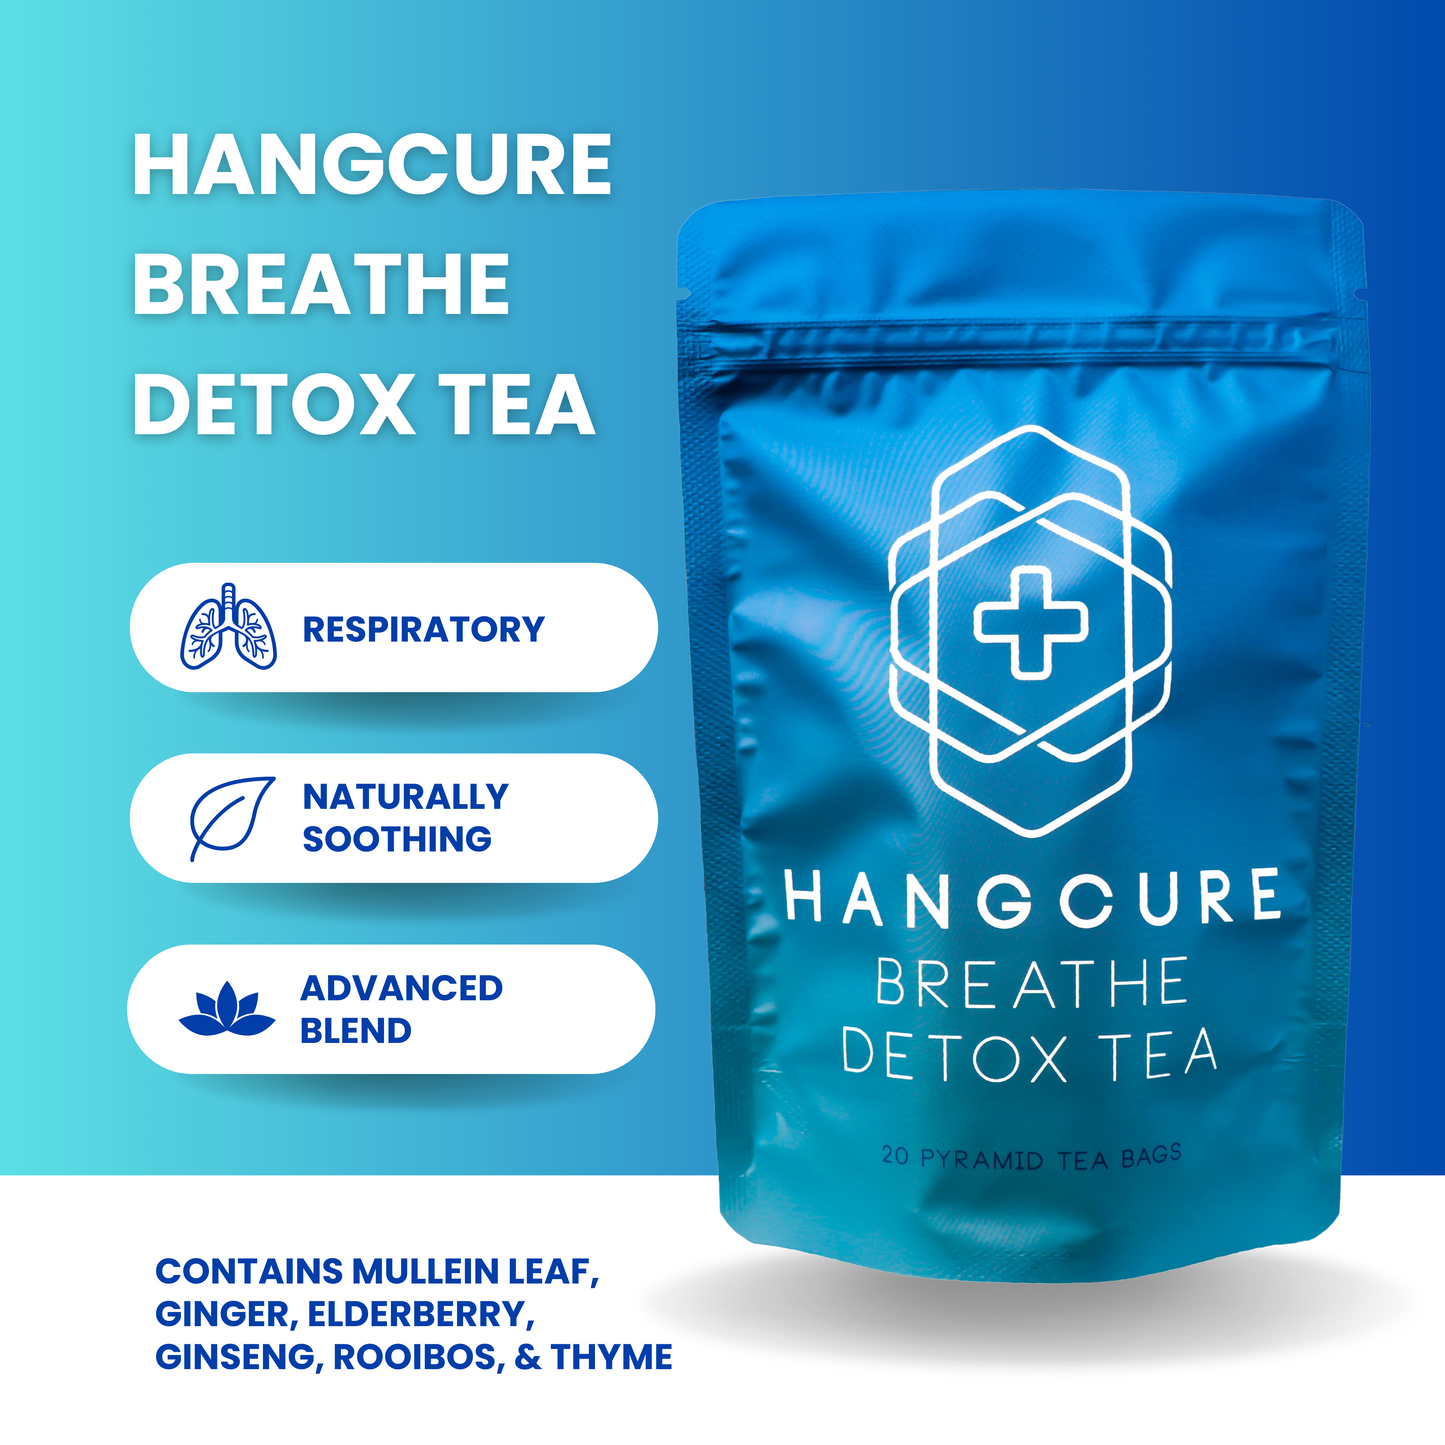 HANGCURE BREATHE DETOX TEA